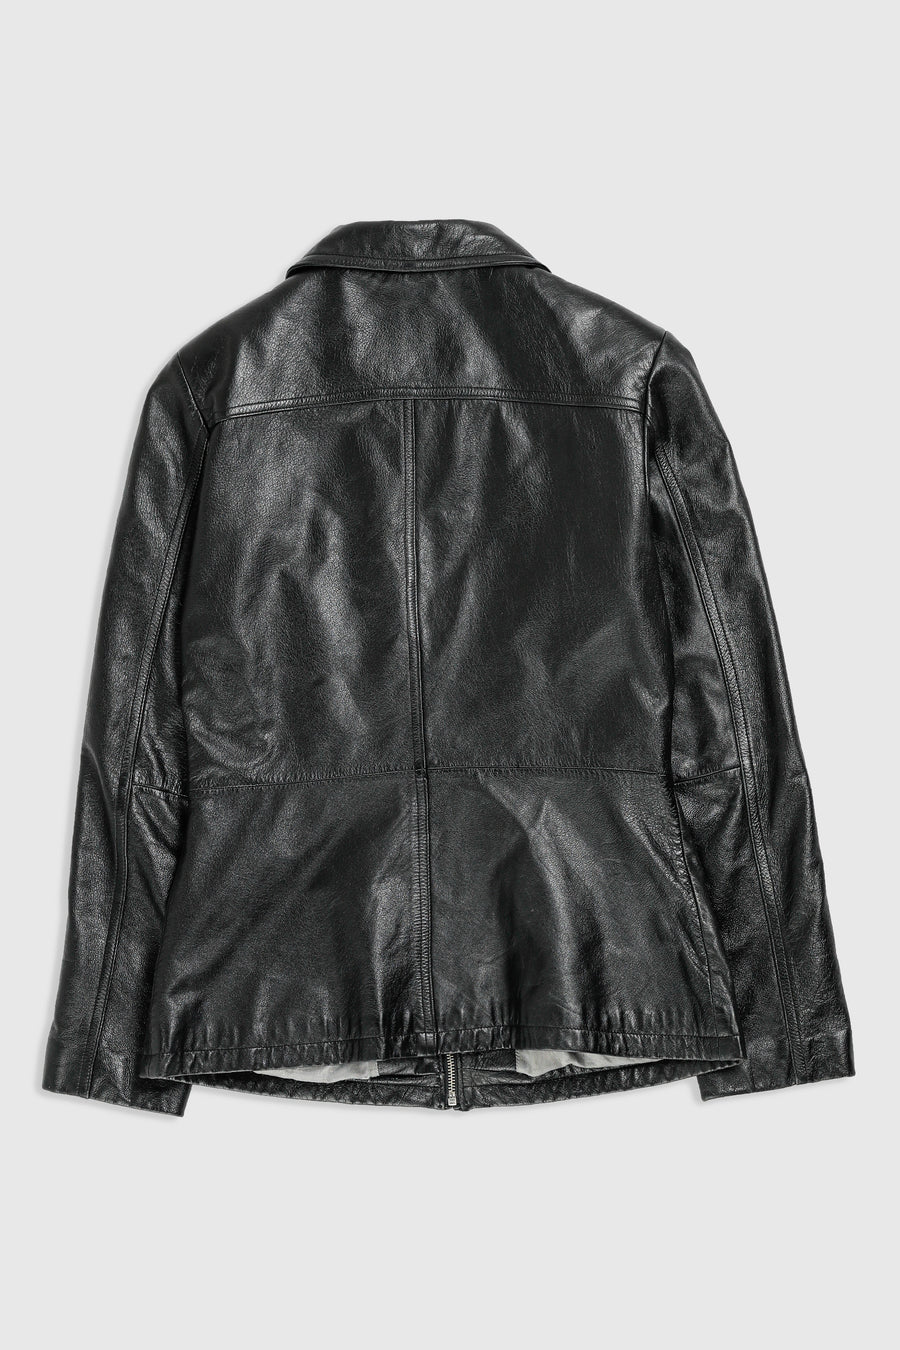 Vintage Leather Jacket - Women's M